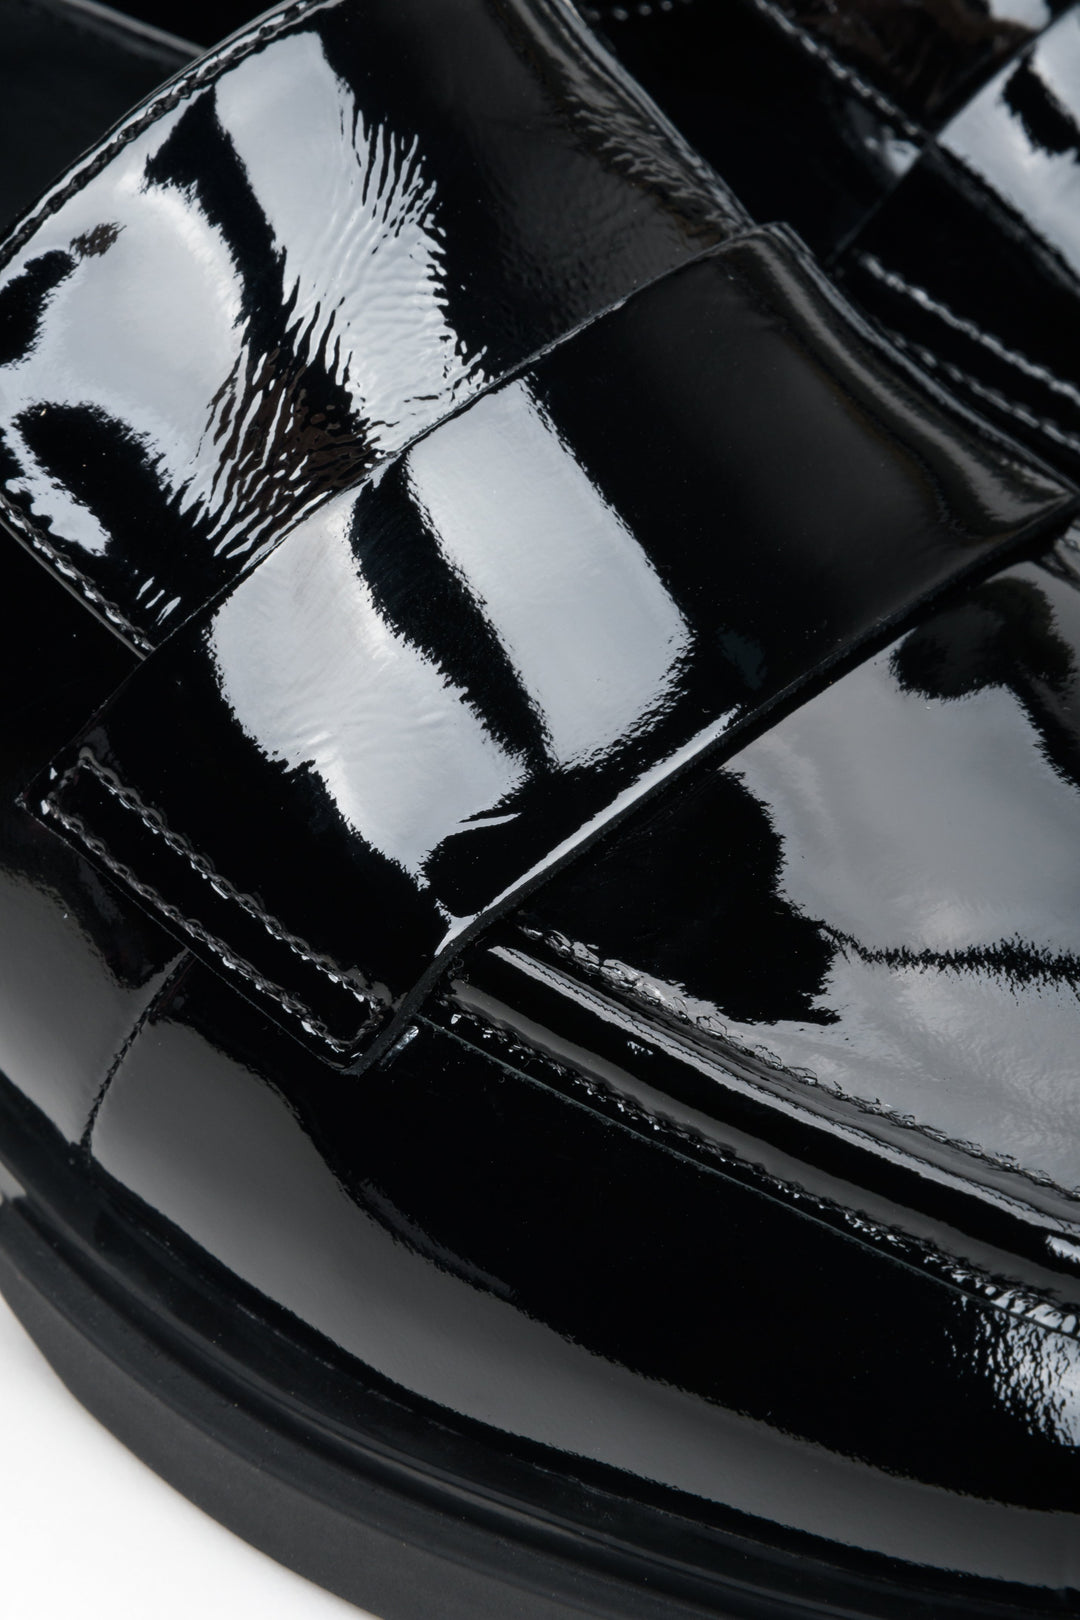 Women's black patent leather moccasins by Estro - close-up on details.